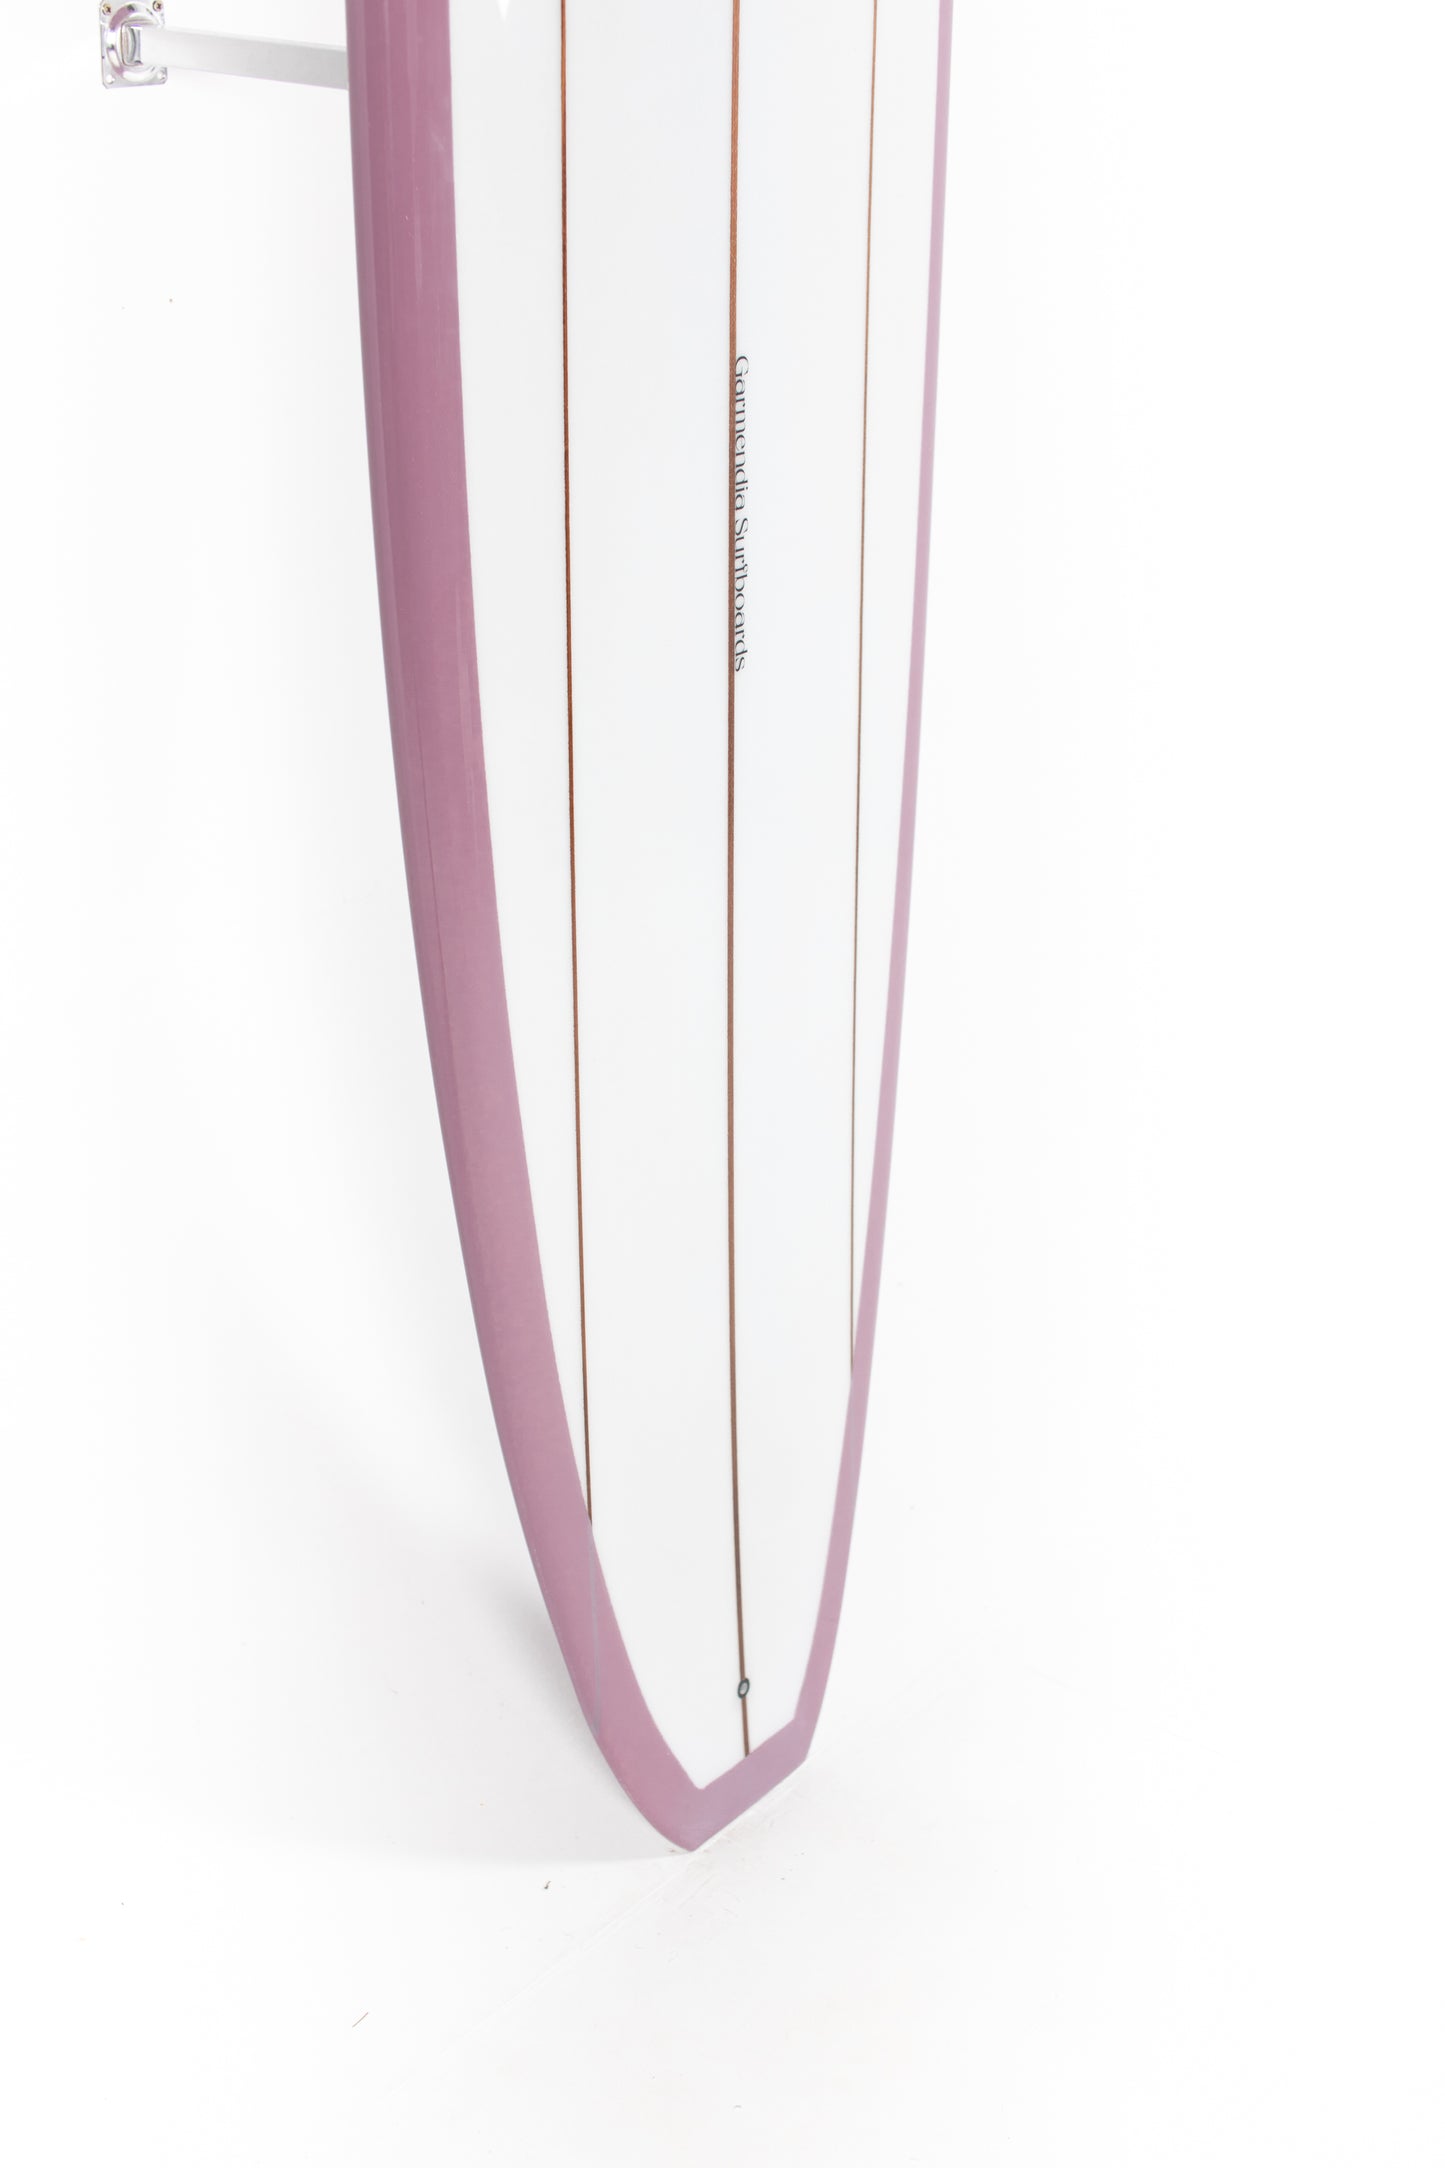 
                  
                    Pukas Surf Shop - Garmendia Surfboards - BULLET - 9'2" x 22 7/8 x 2 7/8 - Ref. BULLET92S22
                  
                